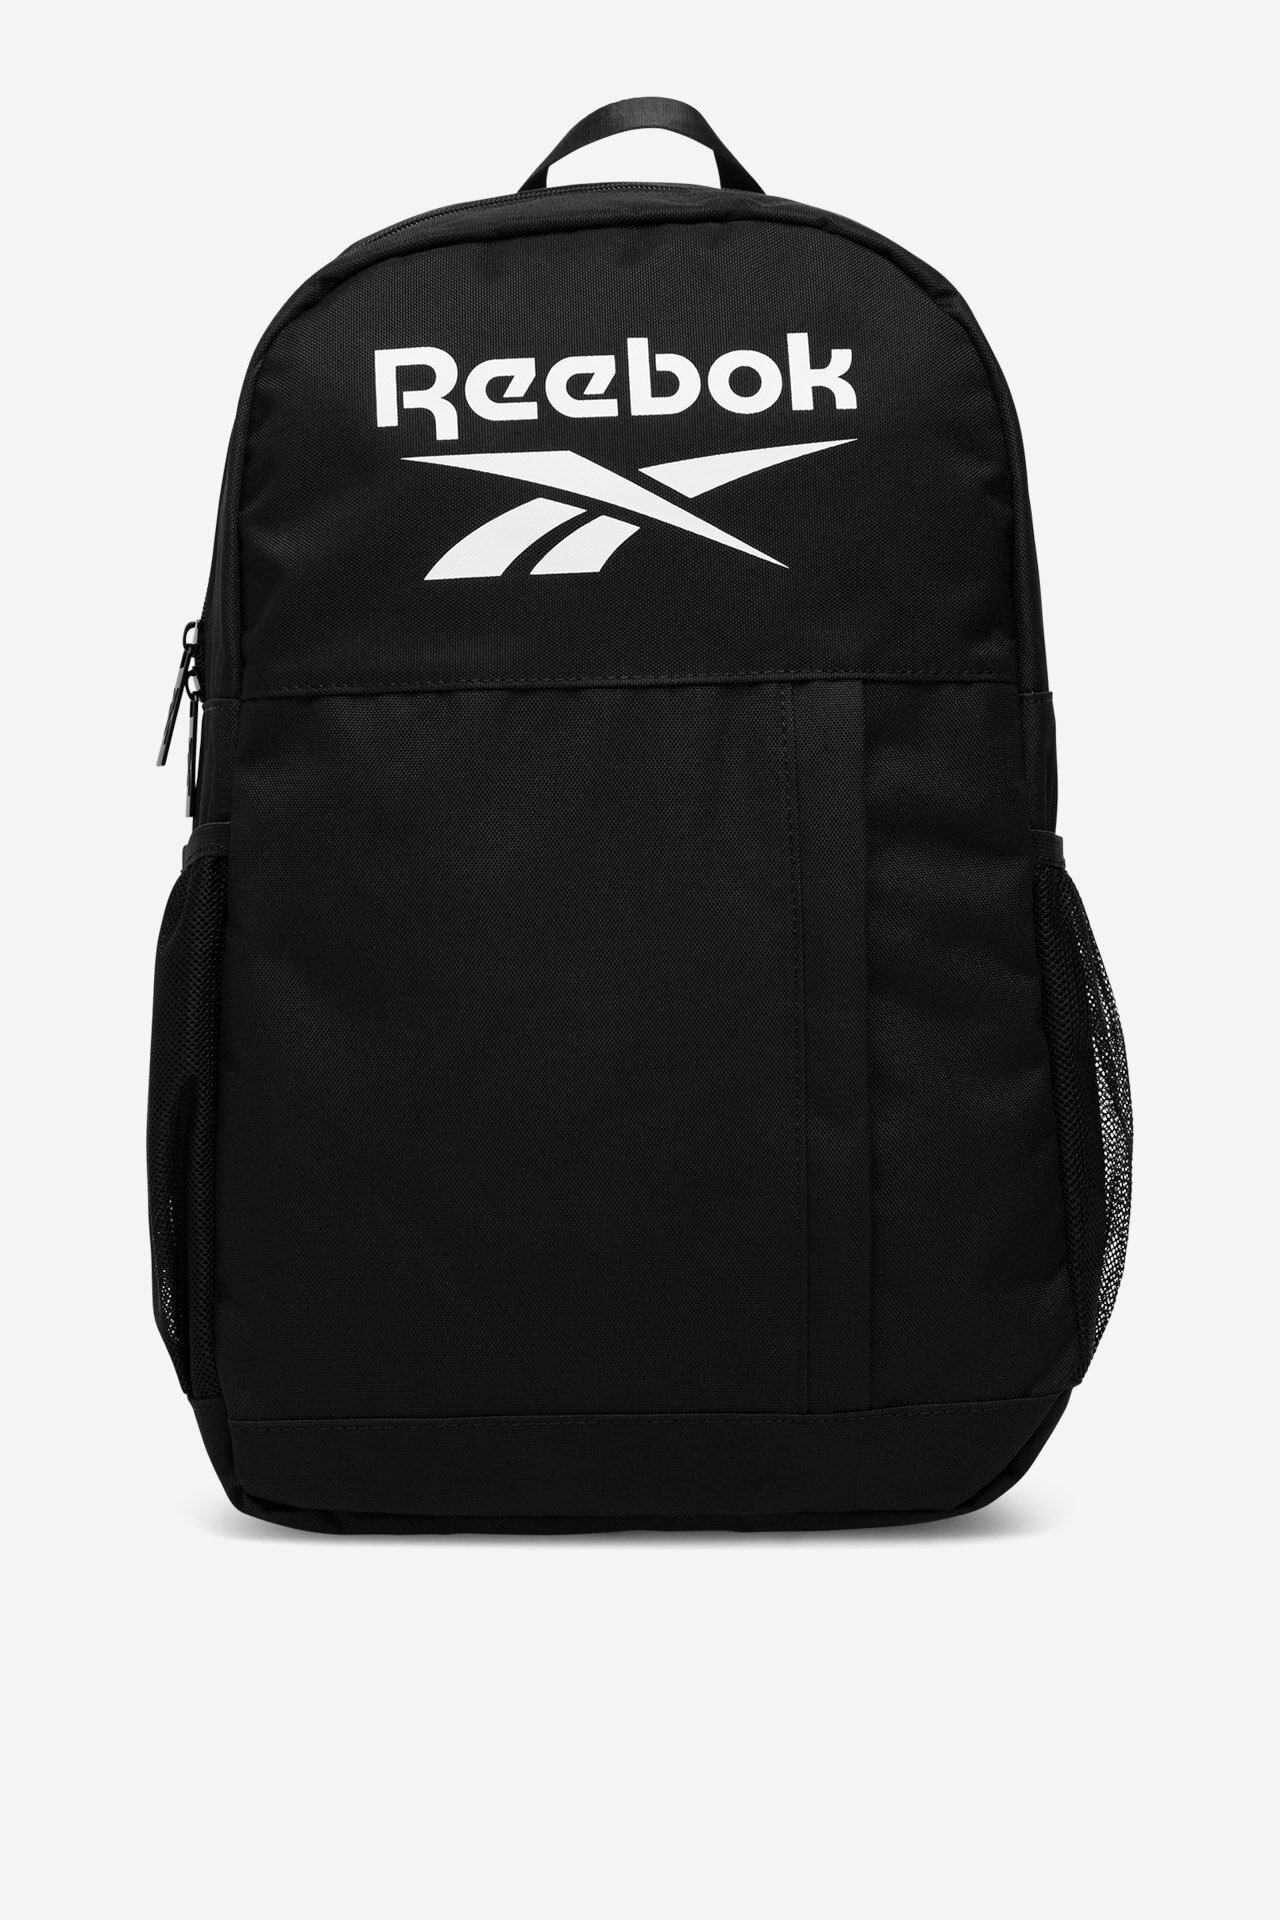 Batohy a tašky Reebok RBK-006-HP-06